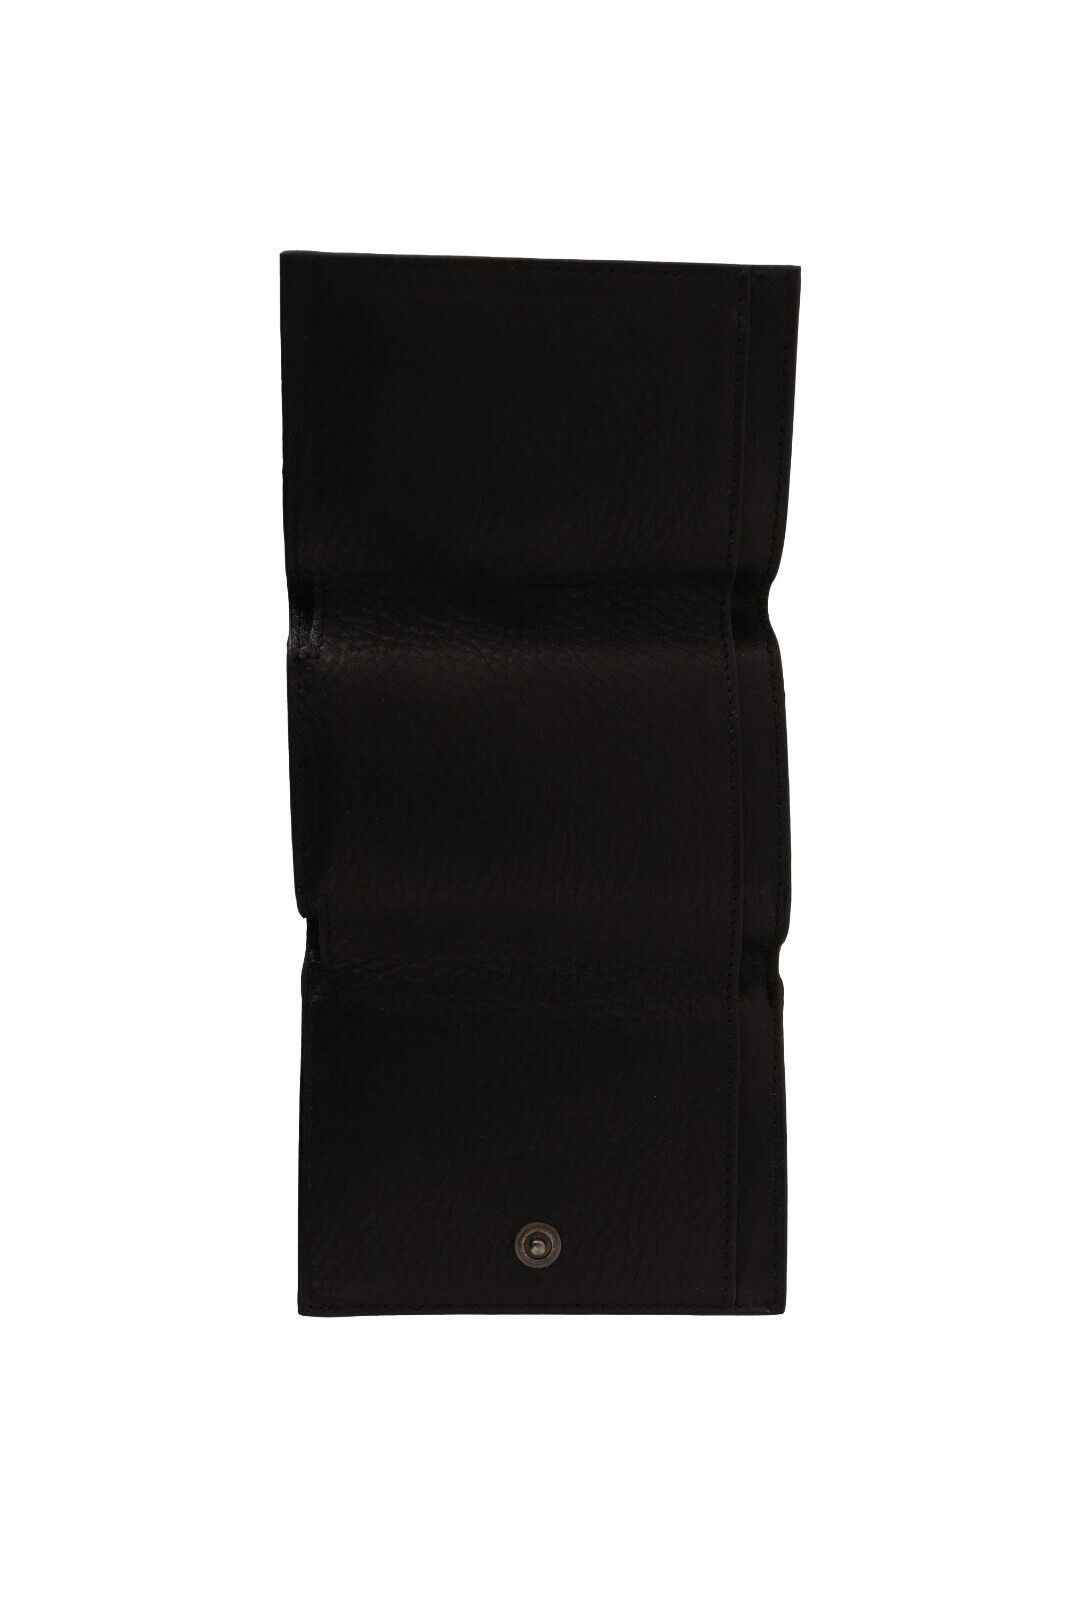 Elegant Black Leather Multi-Kit Trifold Wallet